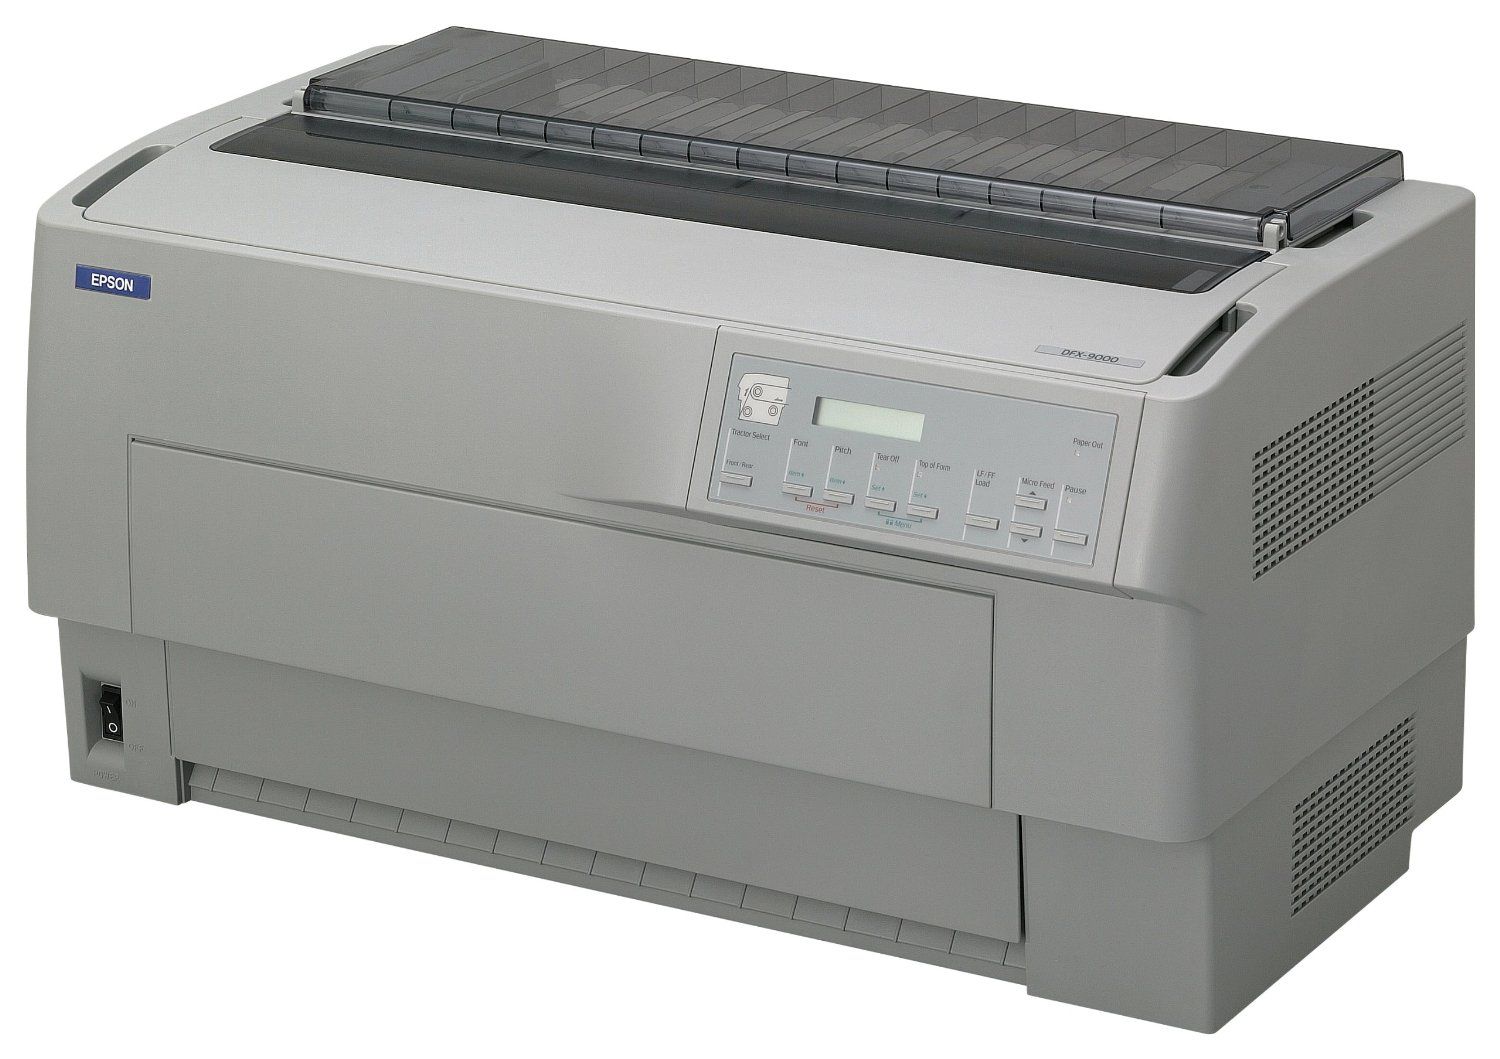 We sell used and refurbished dot matrix printers